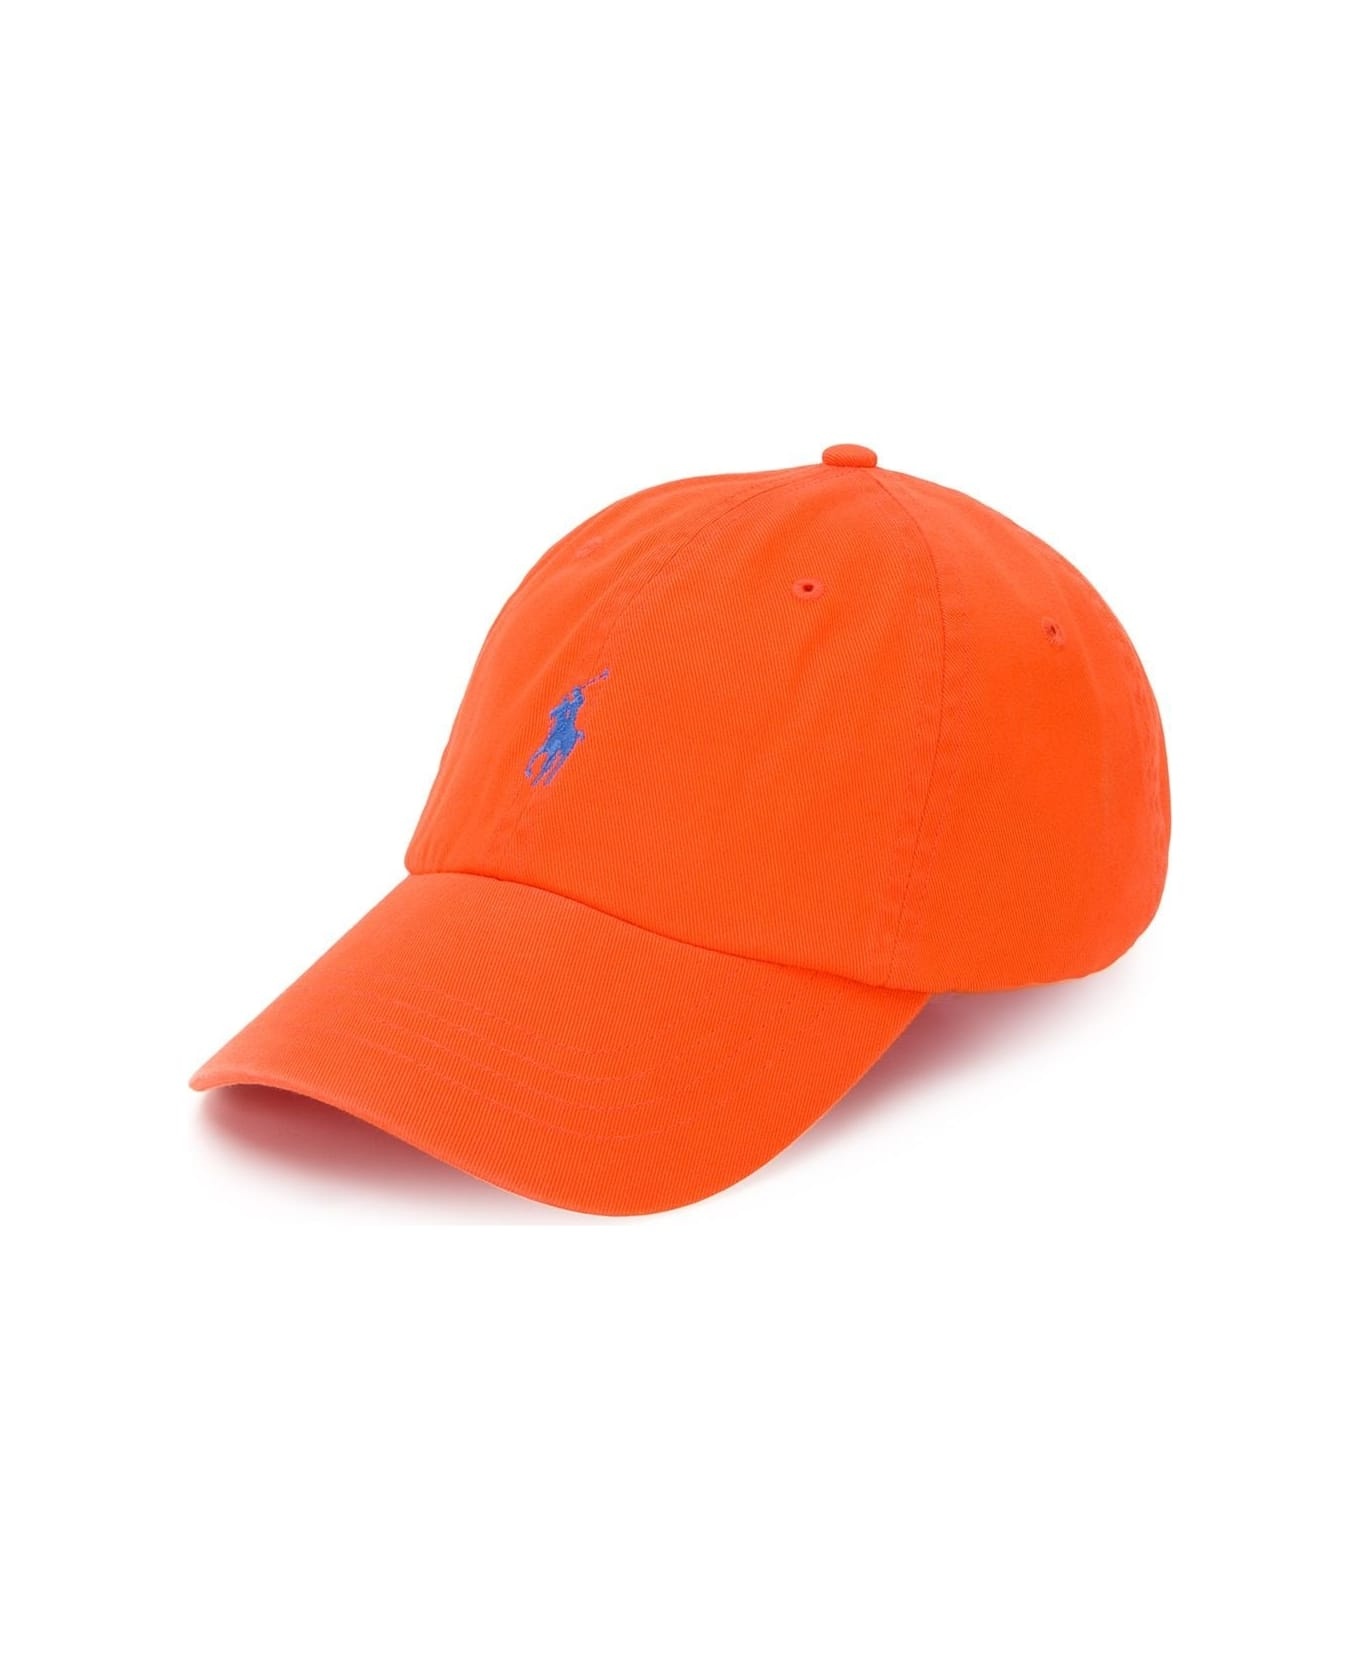 Orange Baseball Hat With Contrasting Pony - 1